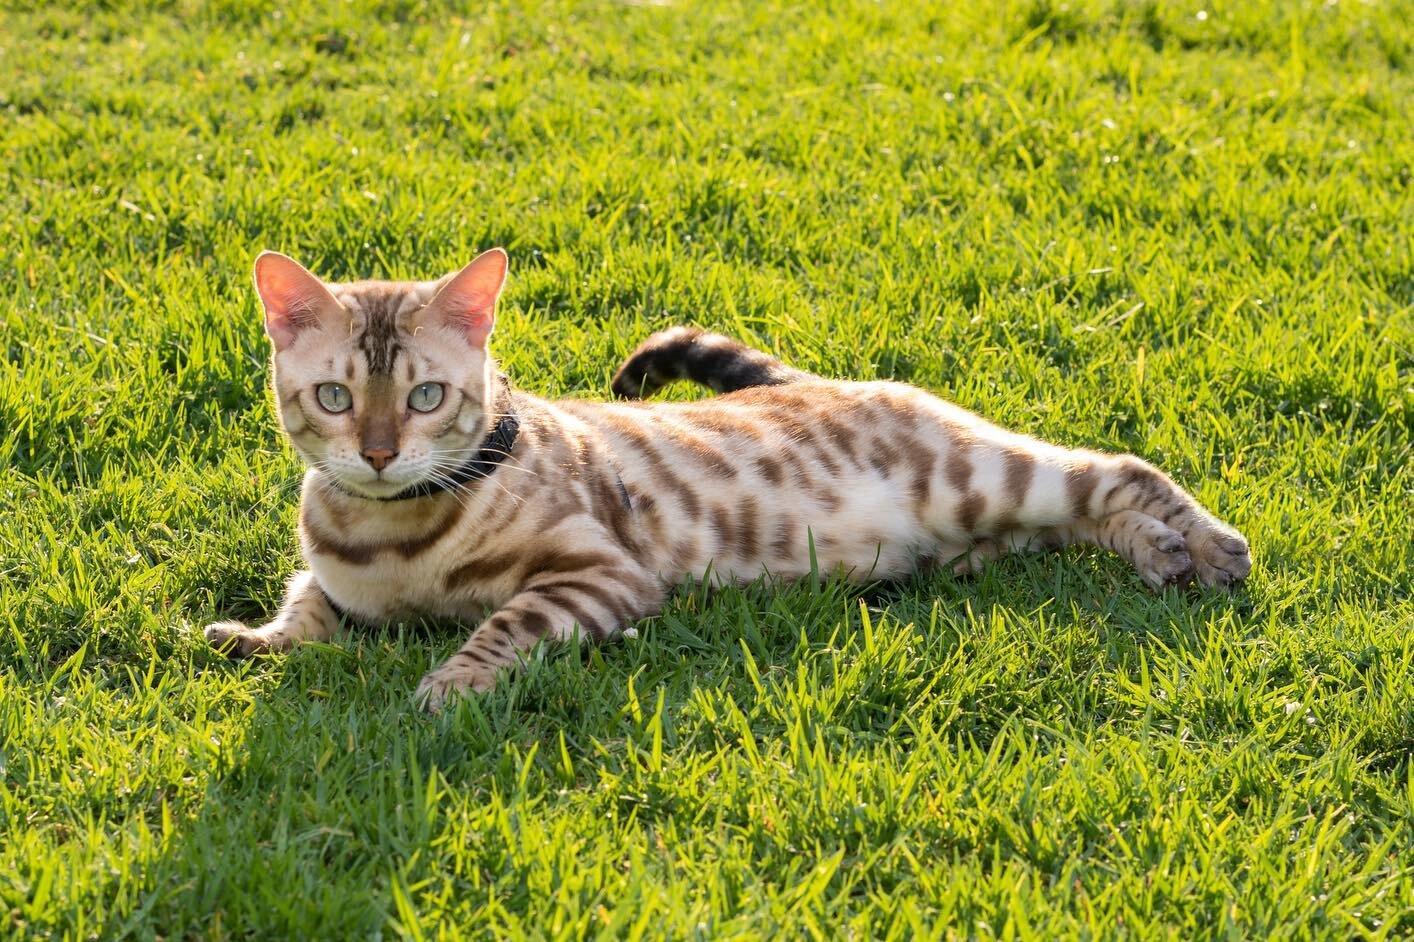 Happy #caturday from our super star wild cat, Leo! 🐯
#begalcat #cat #wildcat